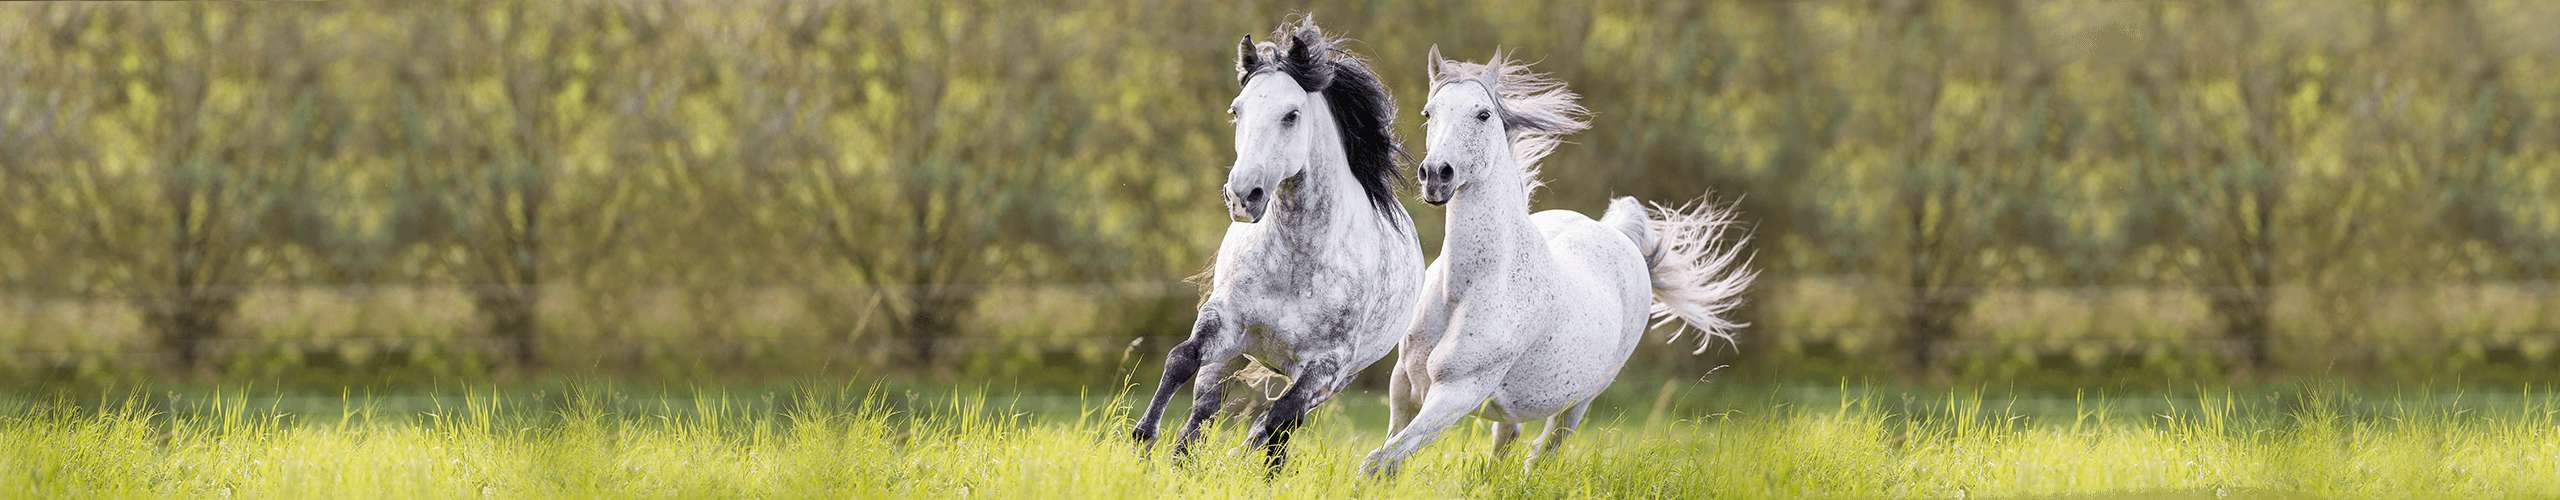 Pferd Immunsystem stärken